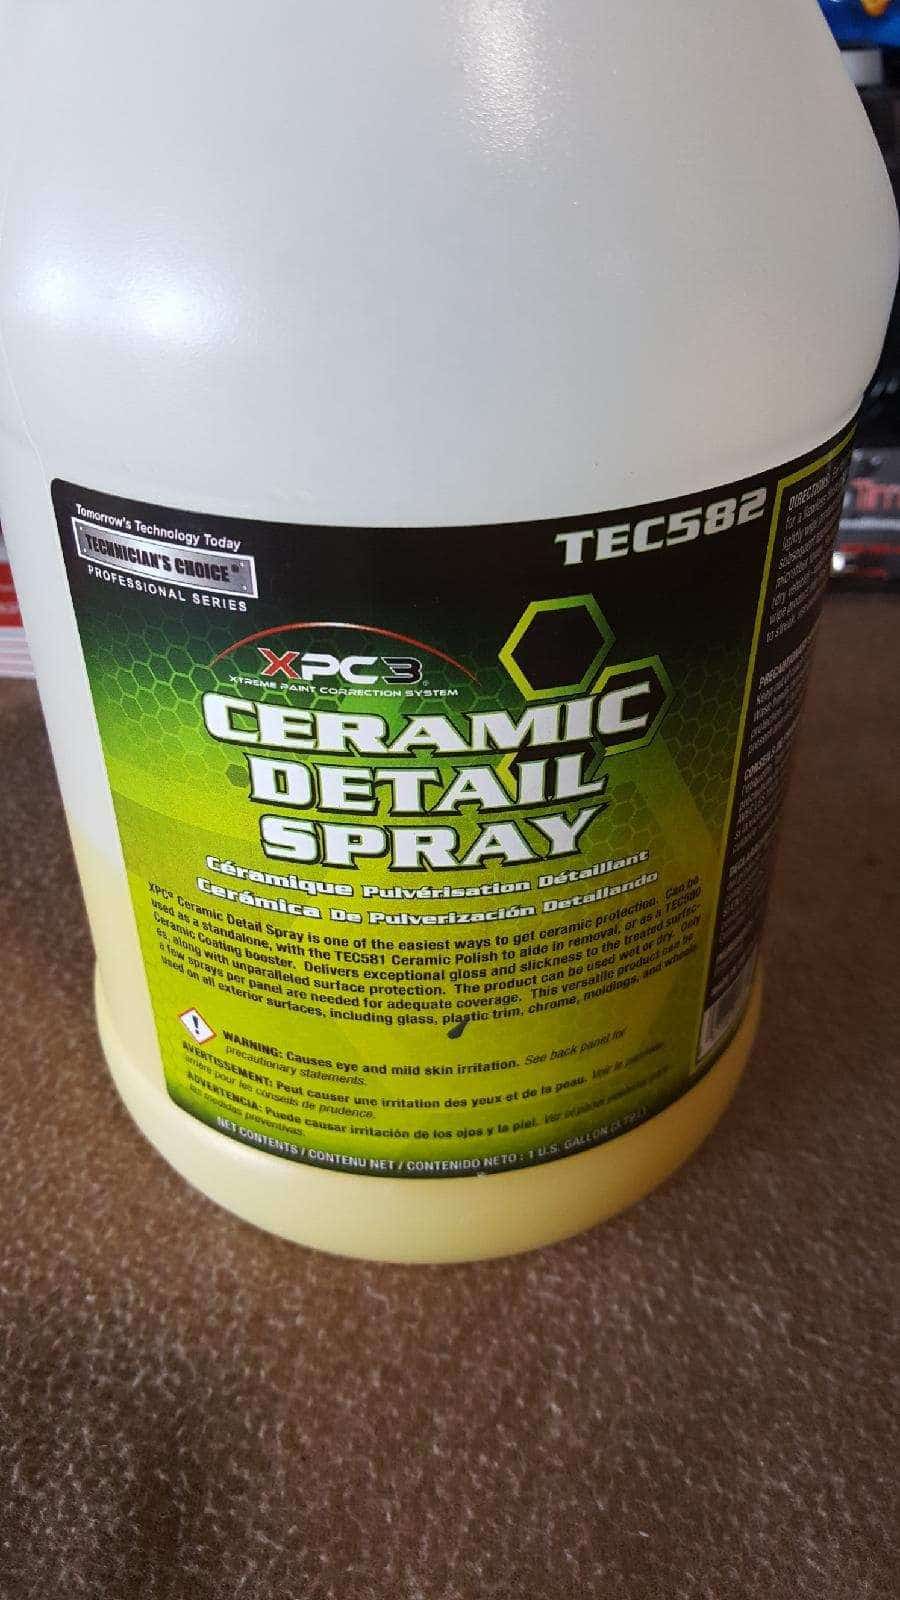 Technicians Choice Tec582 Ceramic Detail Spray 1 Gallon for sale